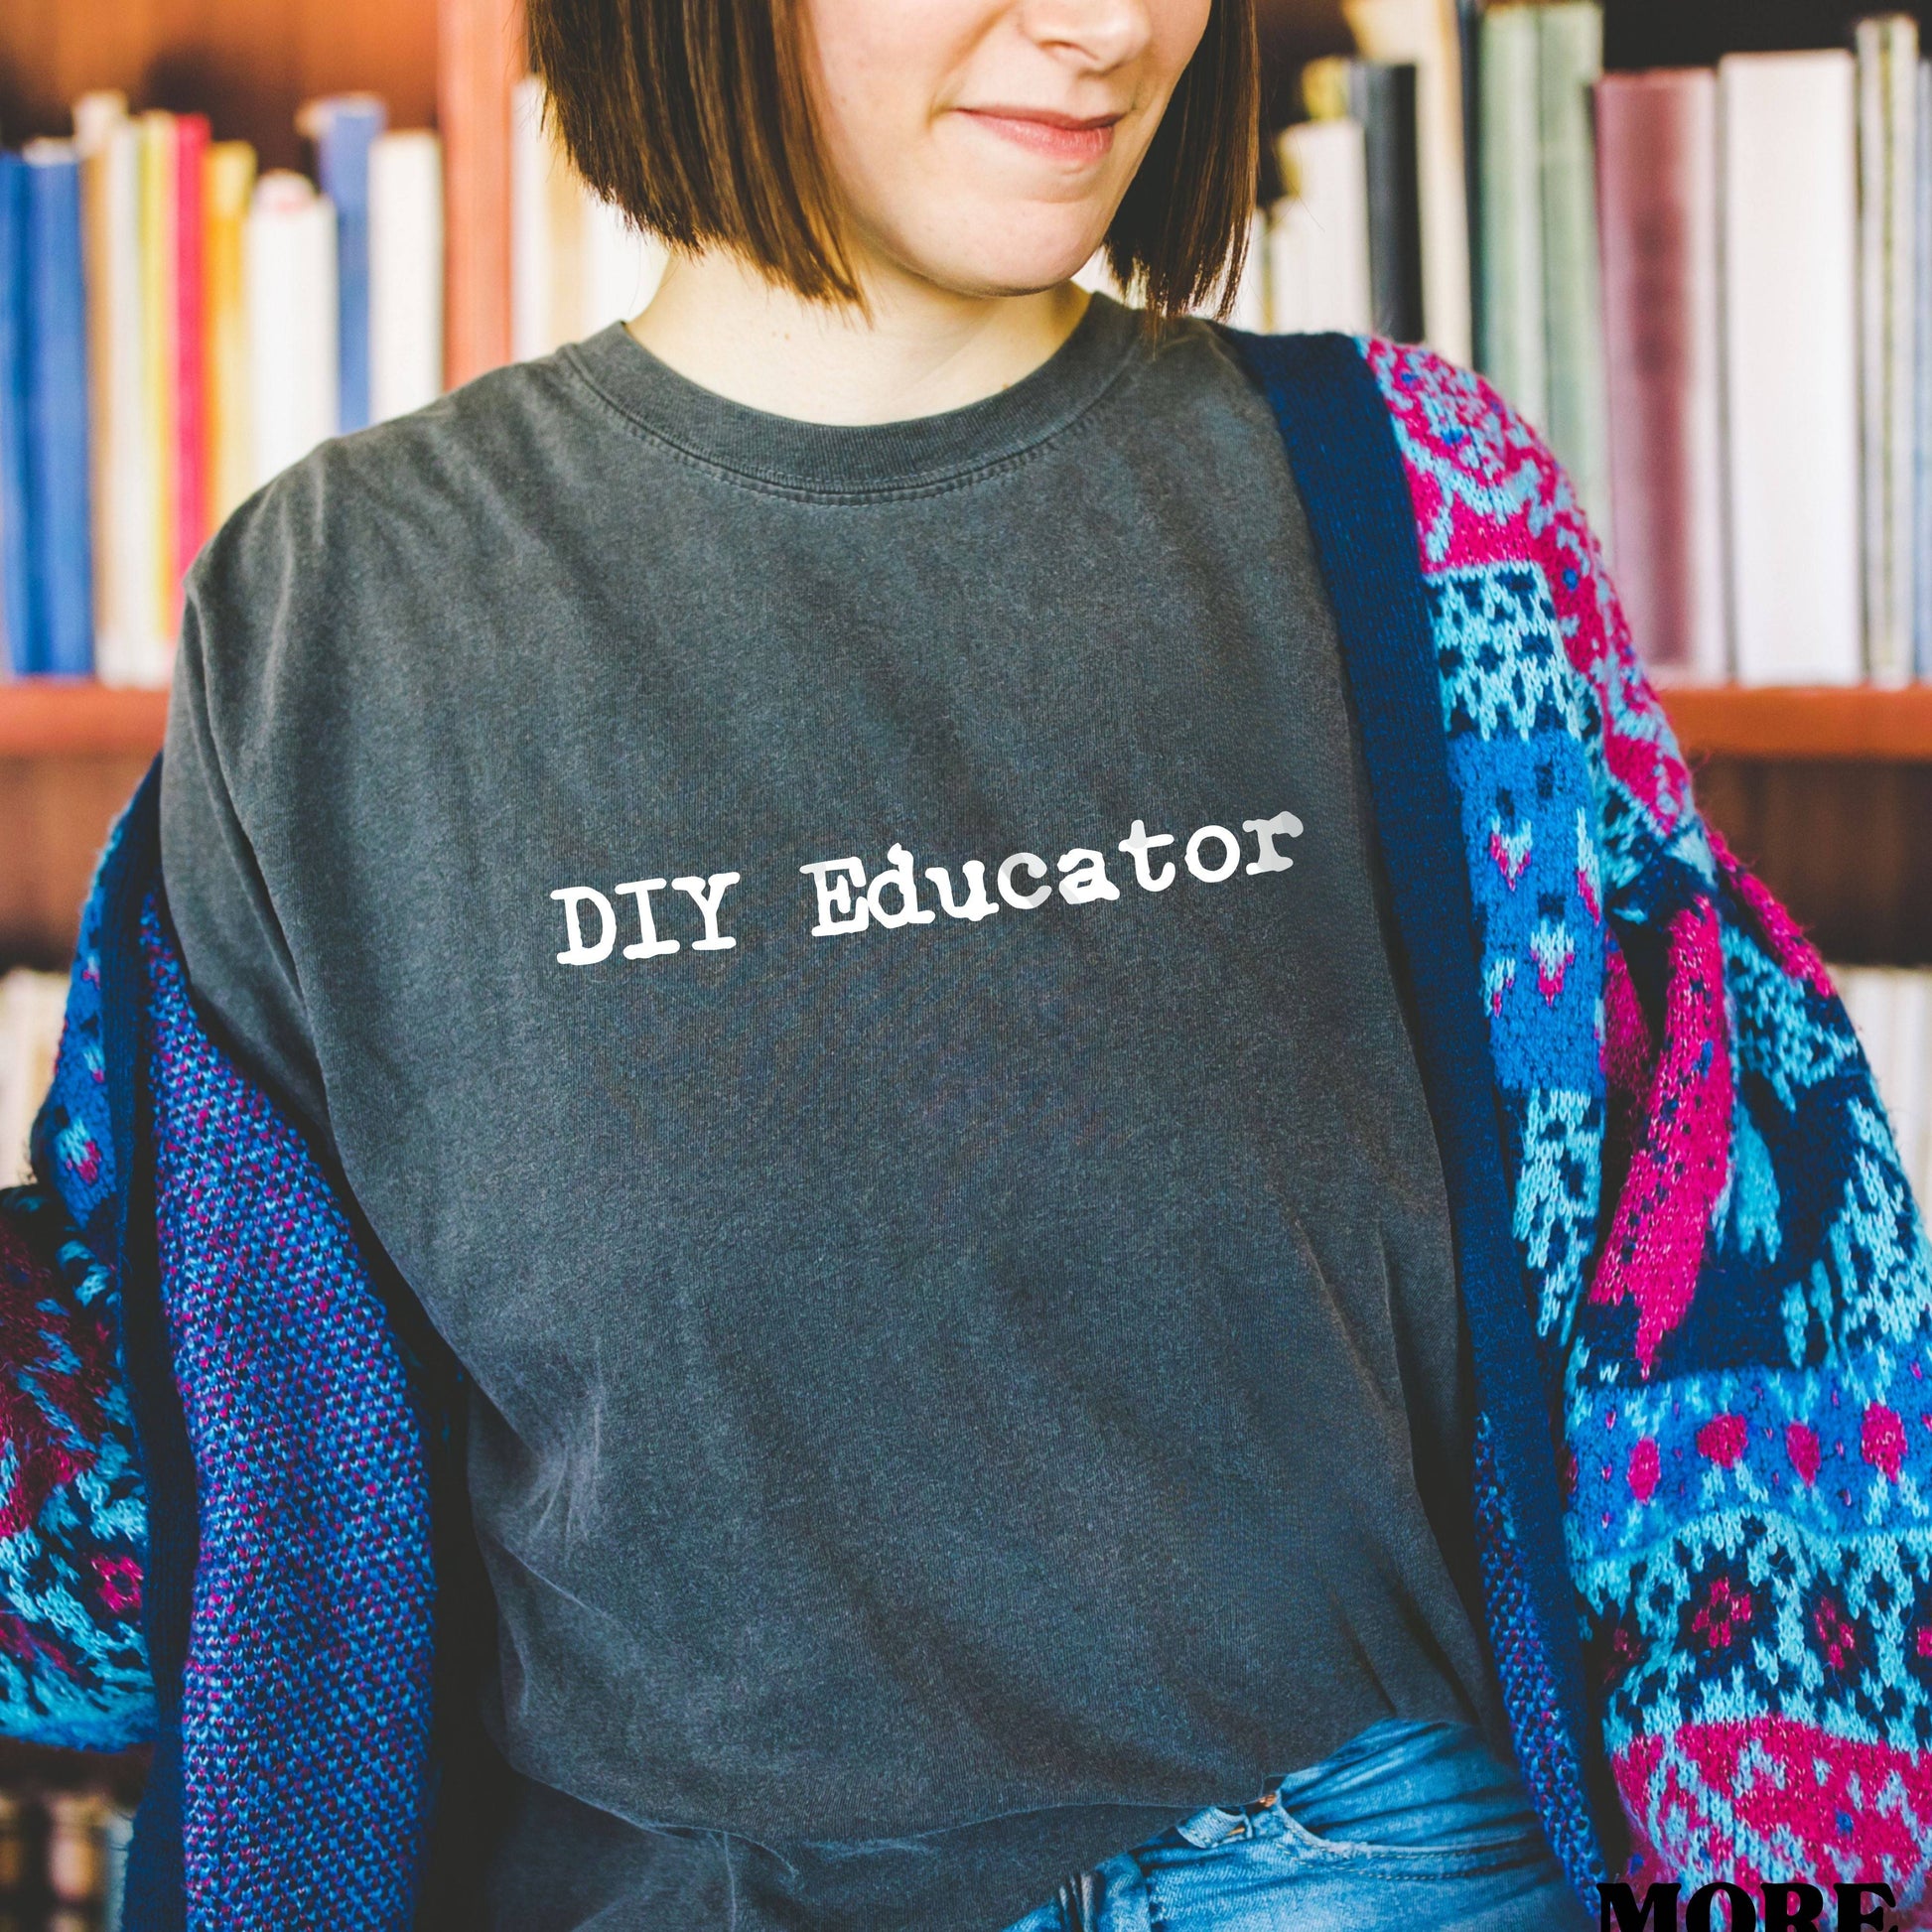 diy educator shirt for homeschool moms